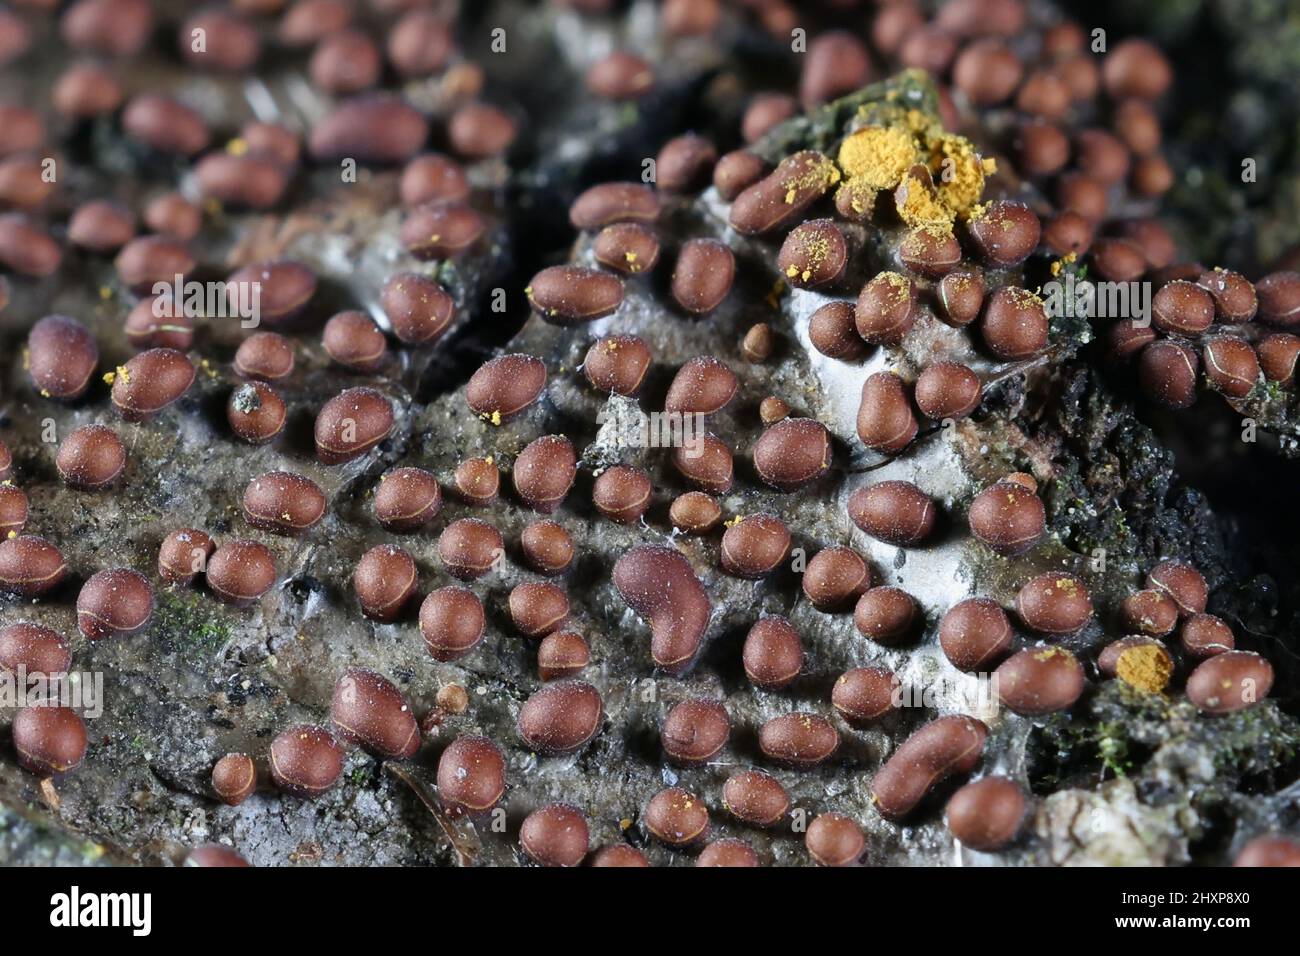 Perichaena corticalis, a slime mold growing on bark of common aspen, no common English name Stock Photo